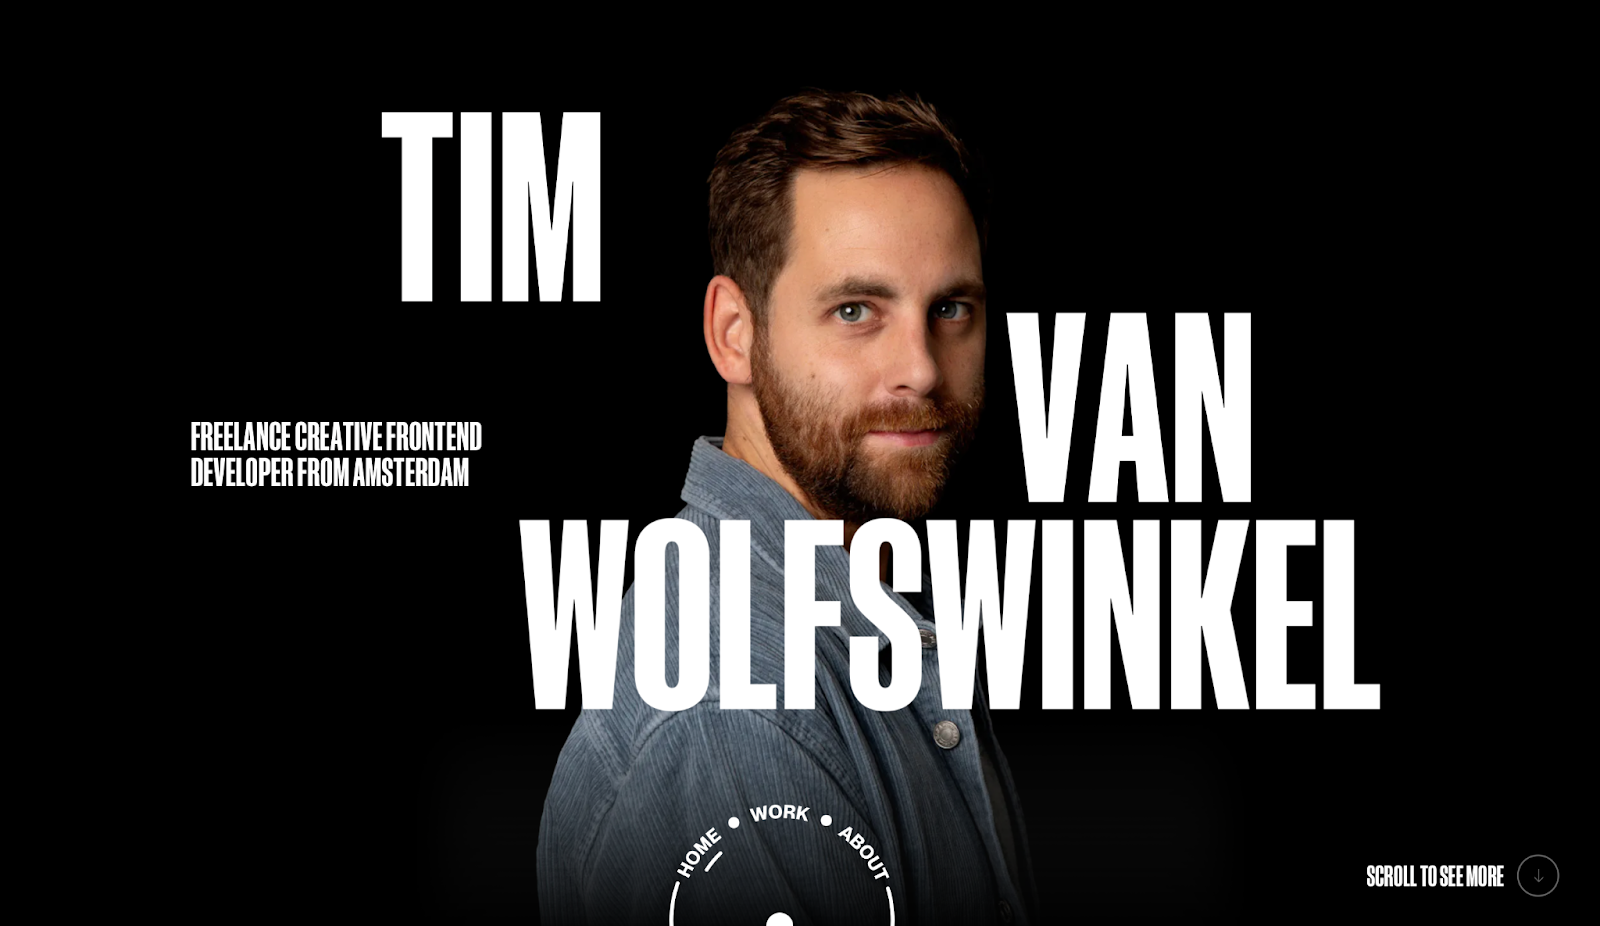 freelancer website example, Tim Van Wolfswinkel